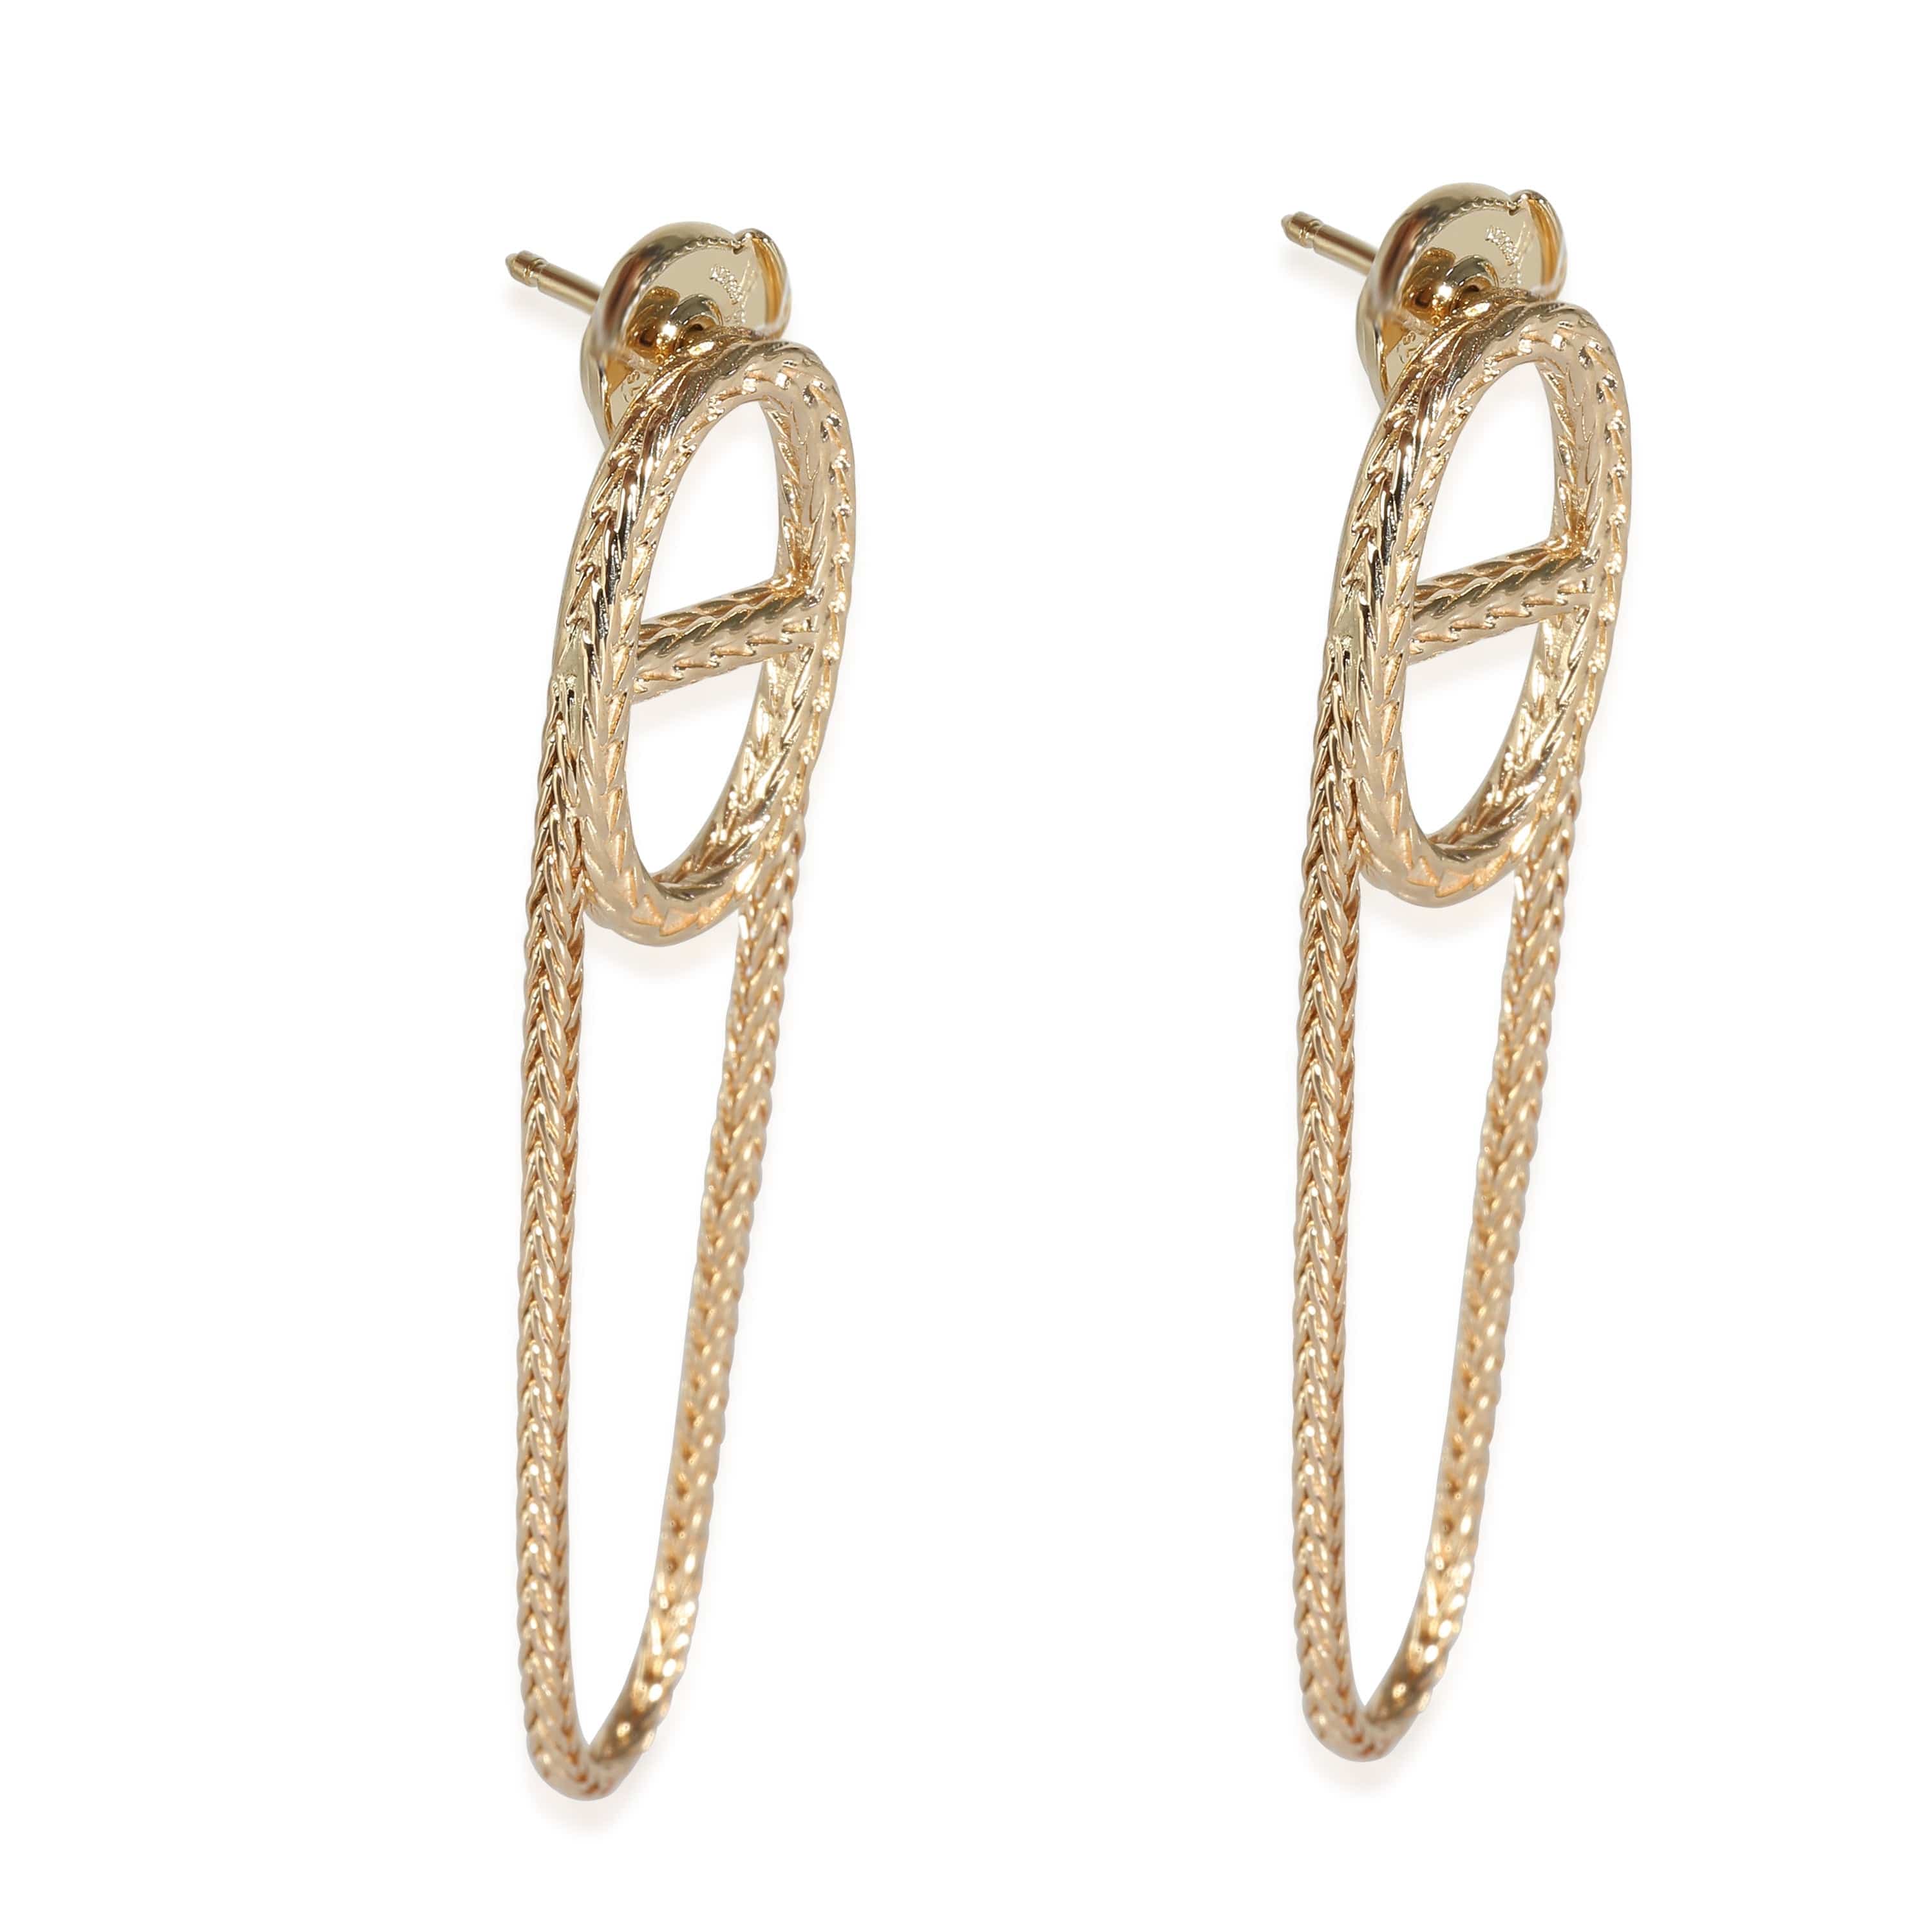 Hermès Hermès Chaine d'ancre Danae Earrings in 18K Yellow Gold